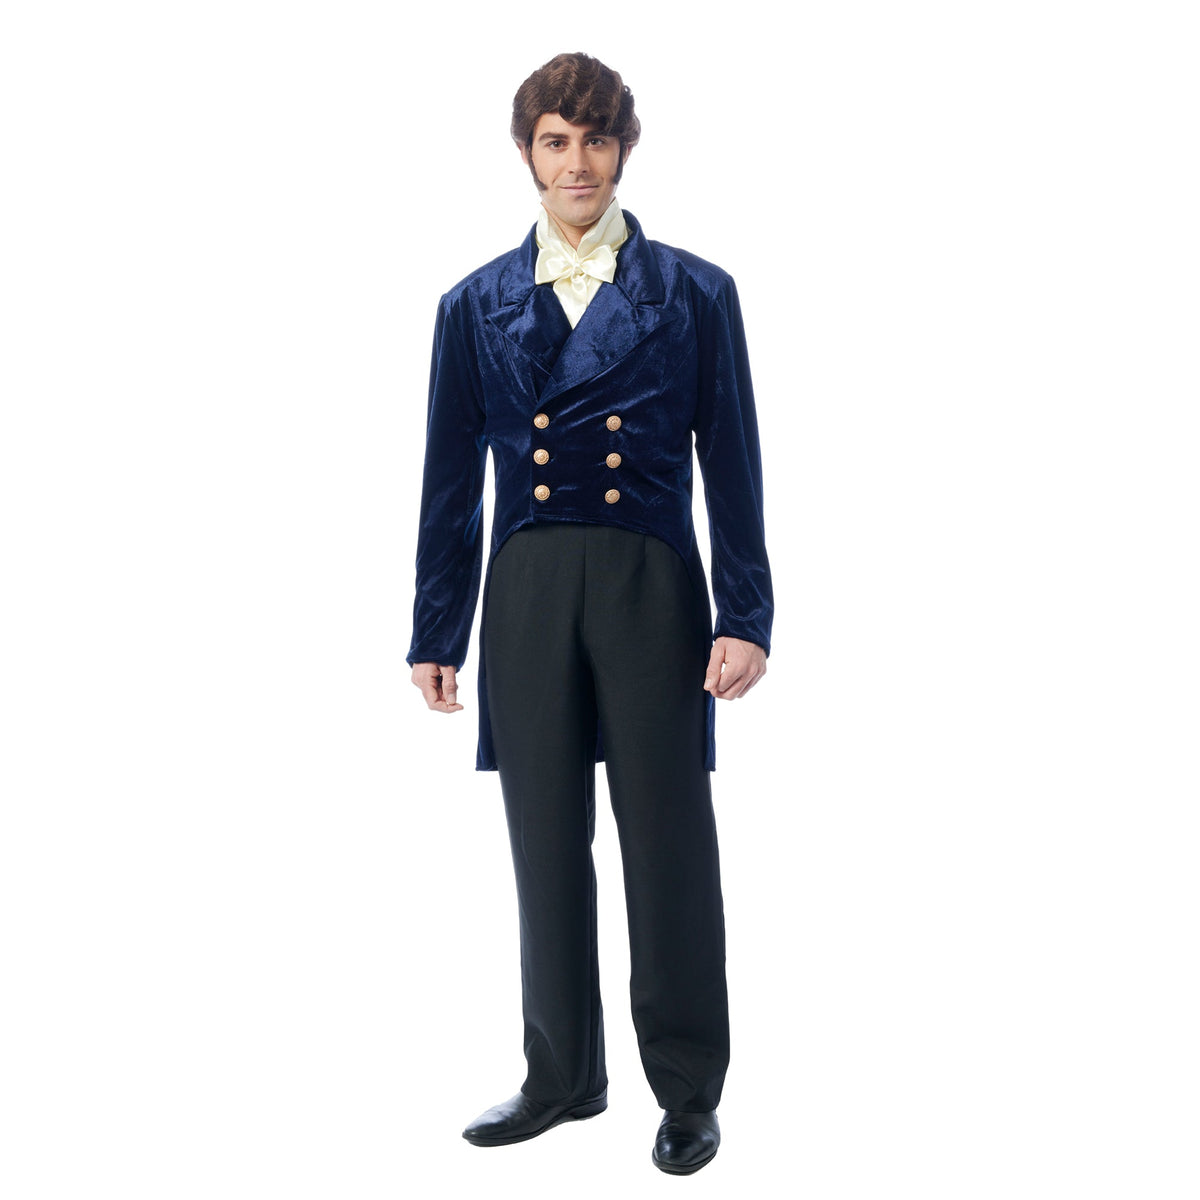 COSTUME CULTURE BY FRANCO Costumes Regency Nobleman Costume for Adults, Dark Blue Tailcoat, Bridgerton